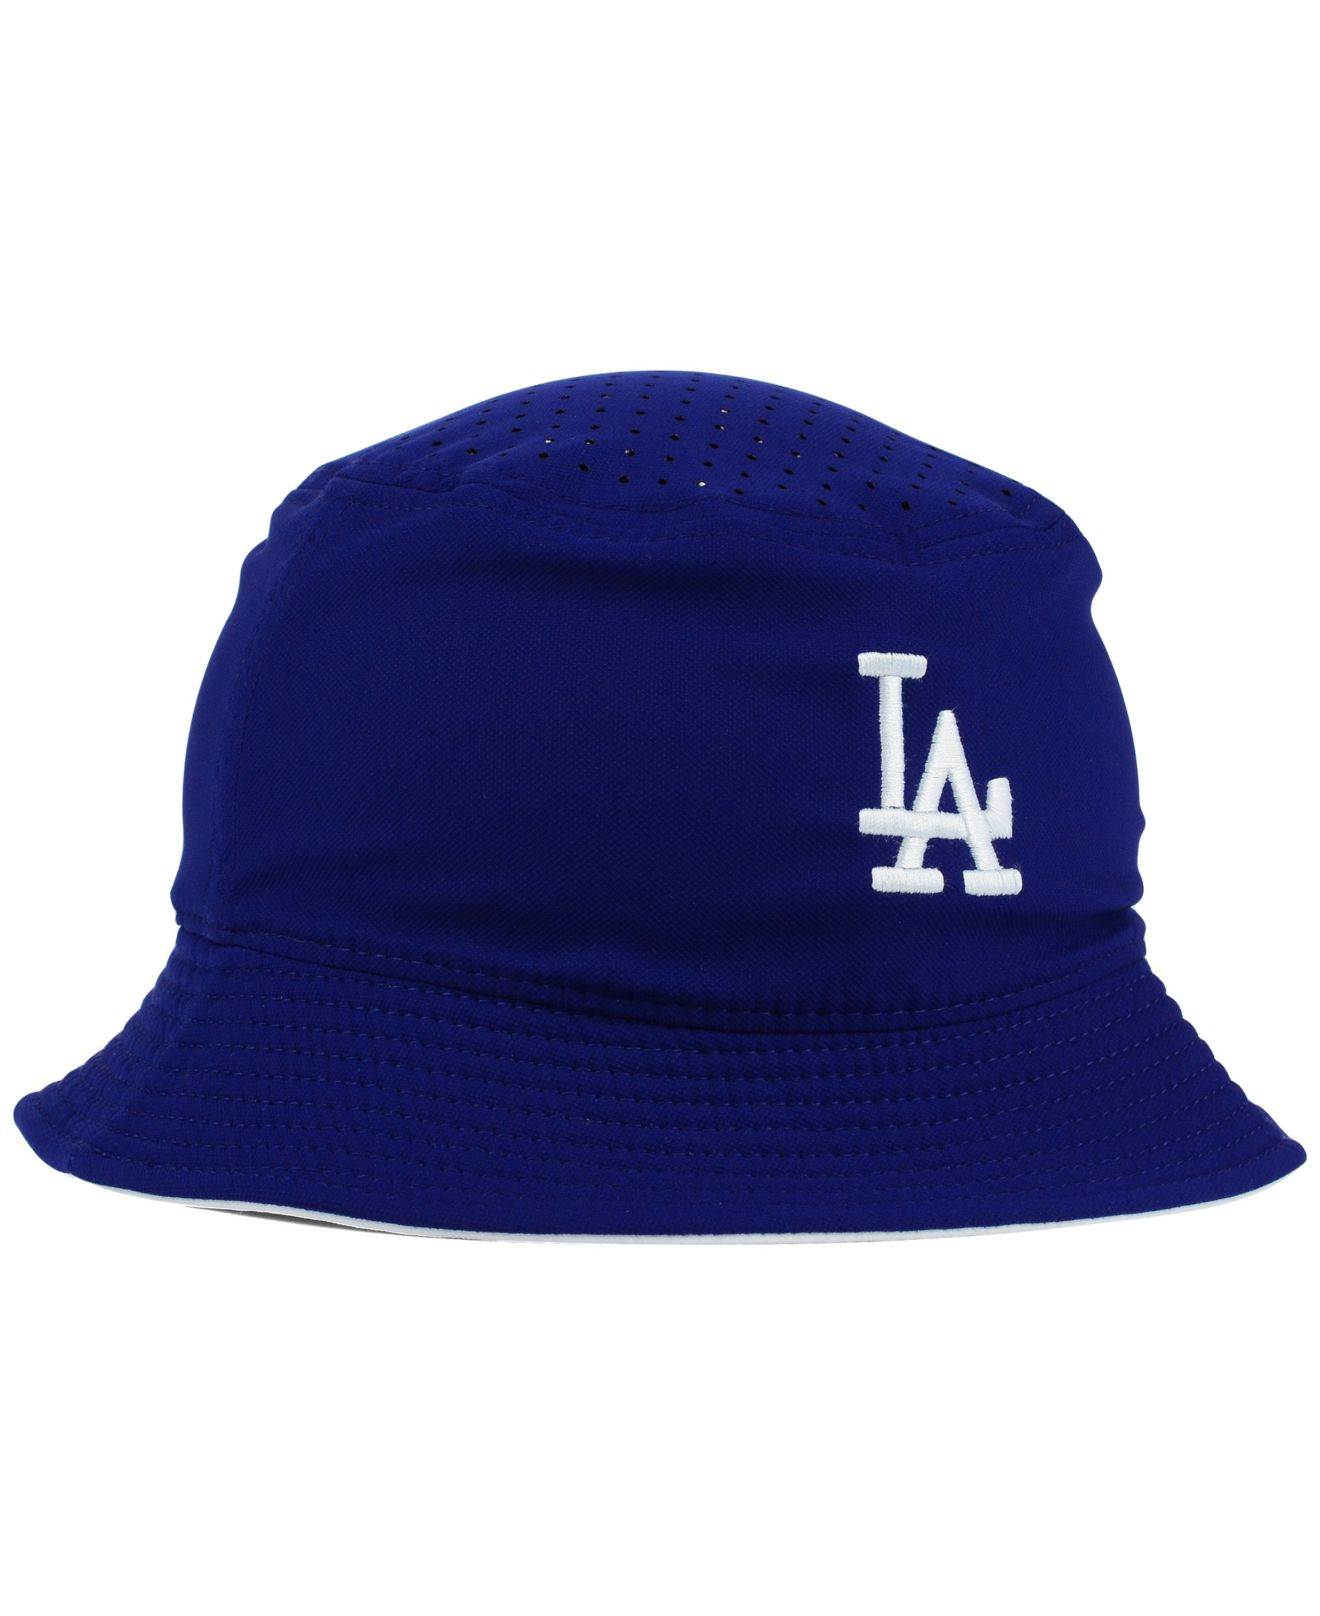 MLB Korea Bucket Hat (LA Hat)